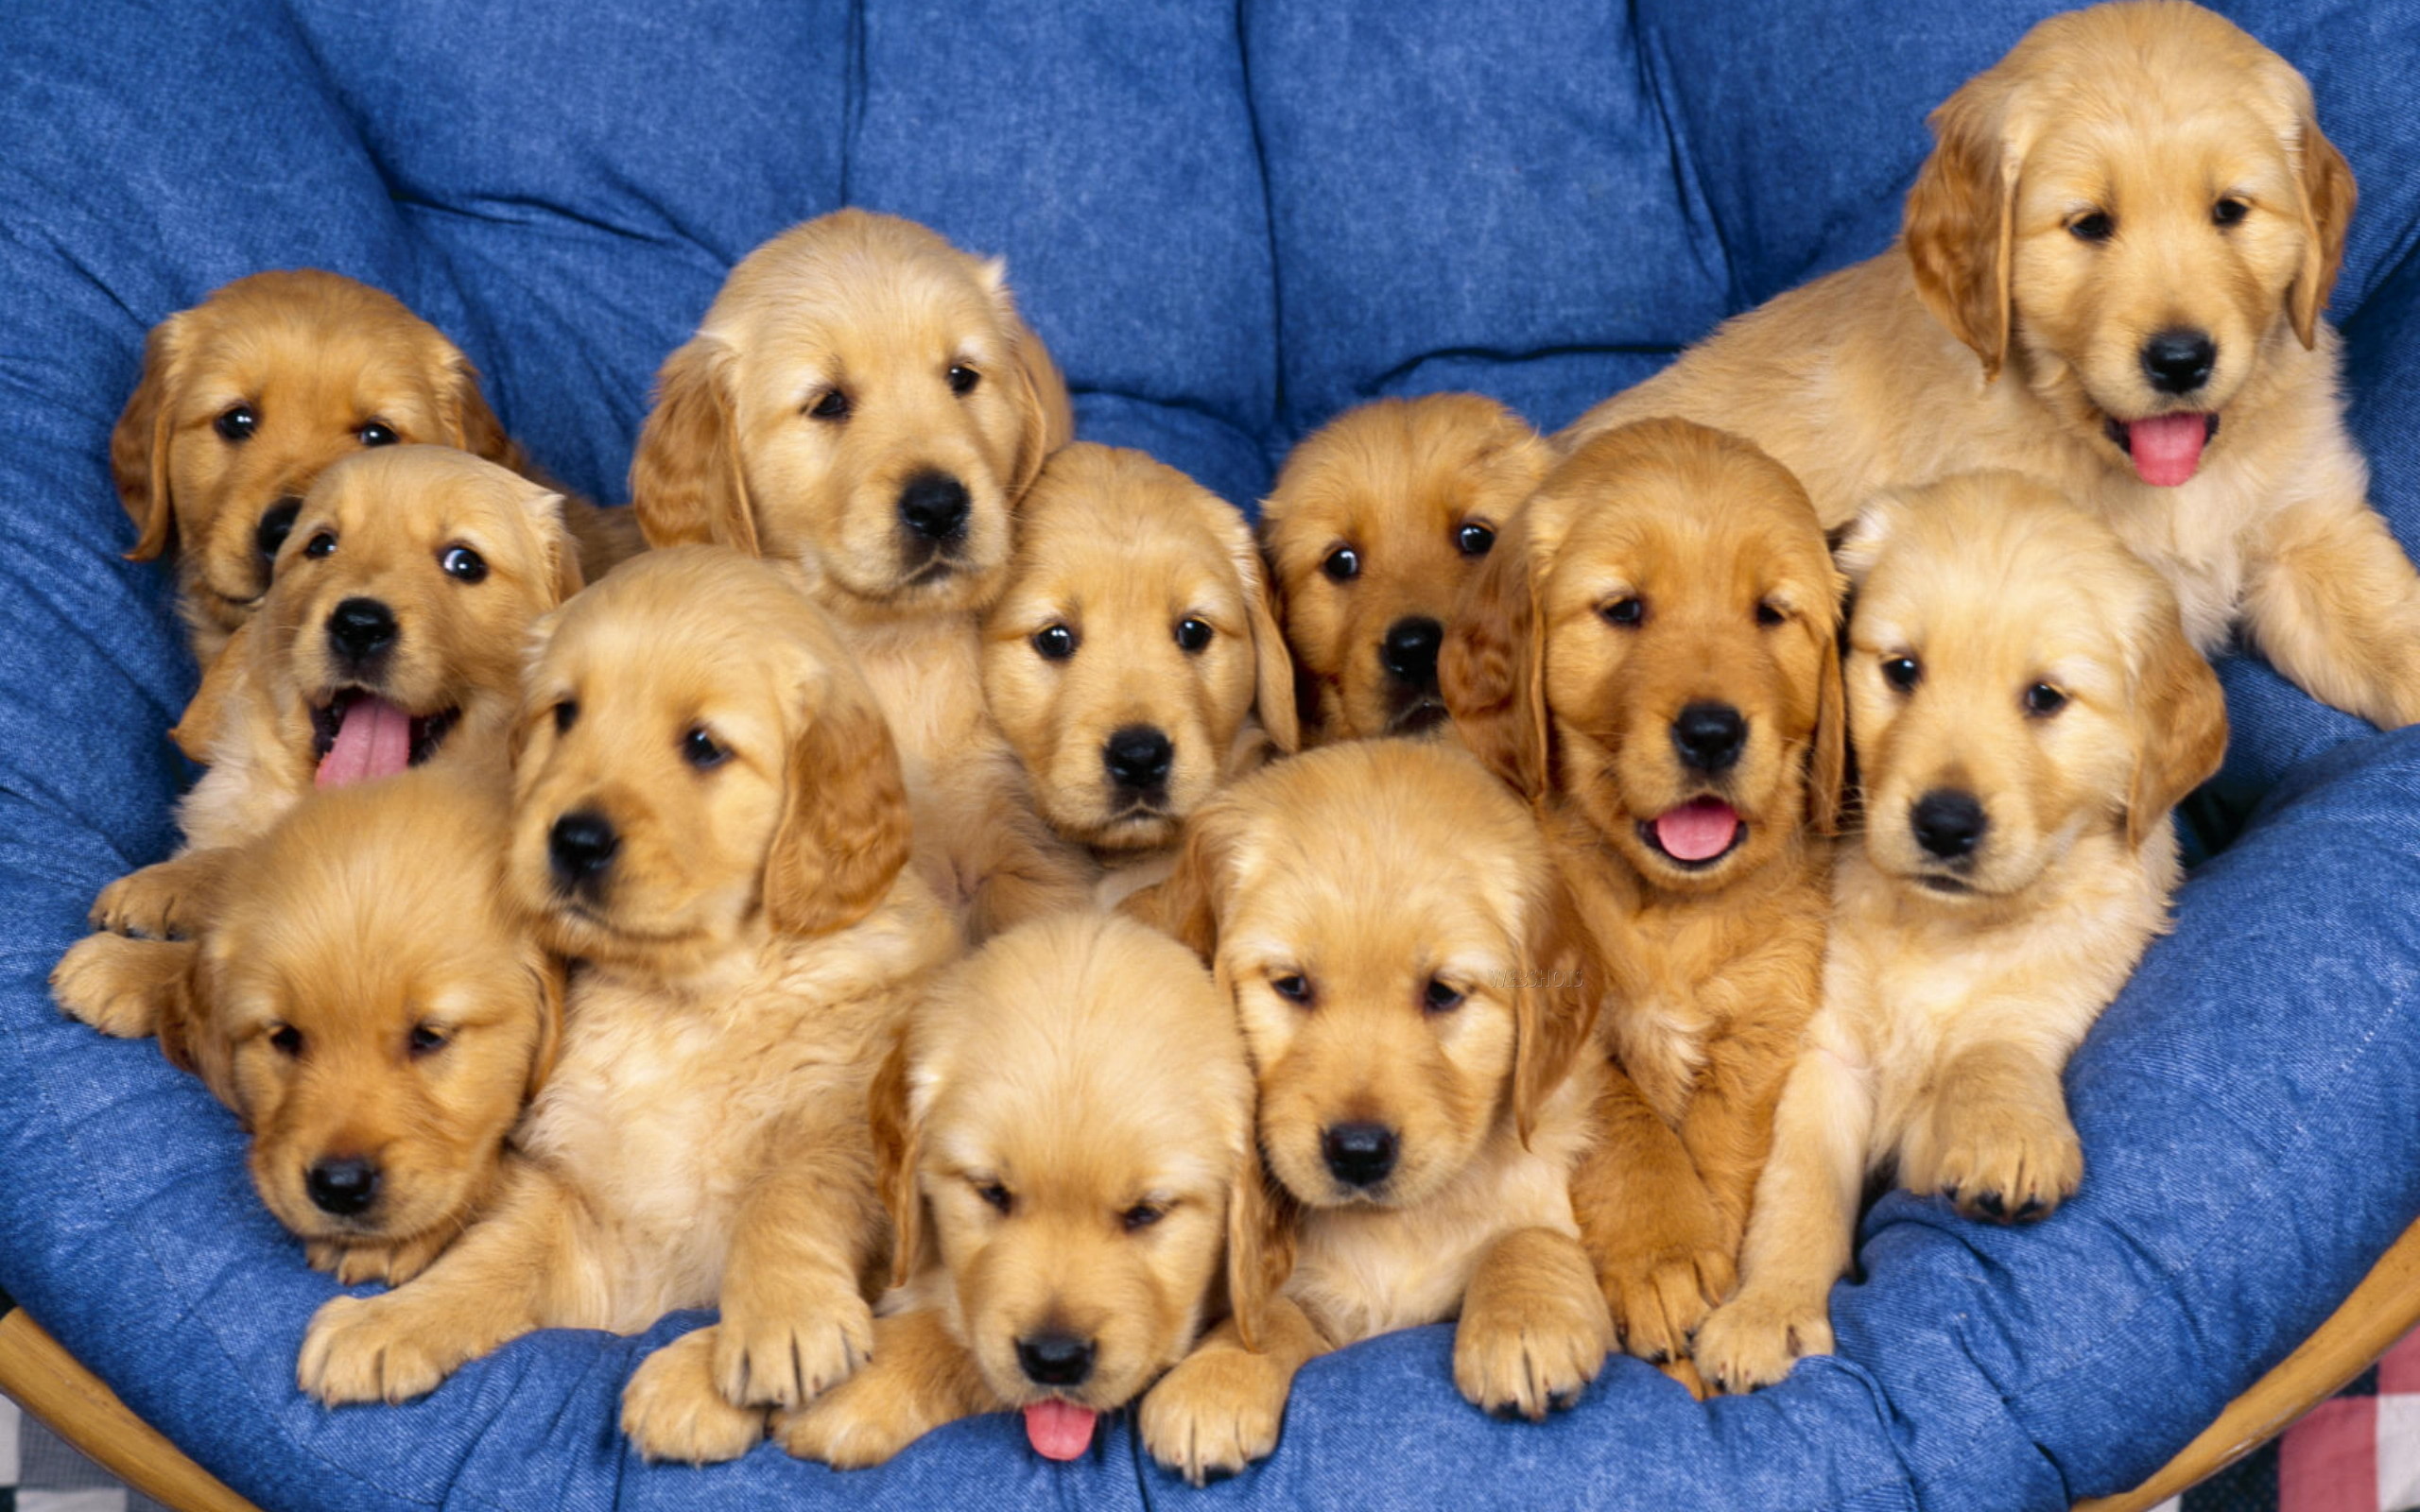 2560x1600 0 1280x960 Dogs Wallpaper  Dogs Wallpapers, Full HD 1080p, Best HD Dogs  Wallpapers, GG.YAN